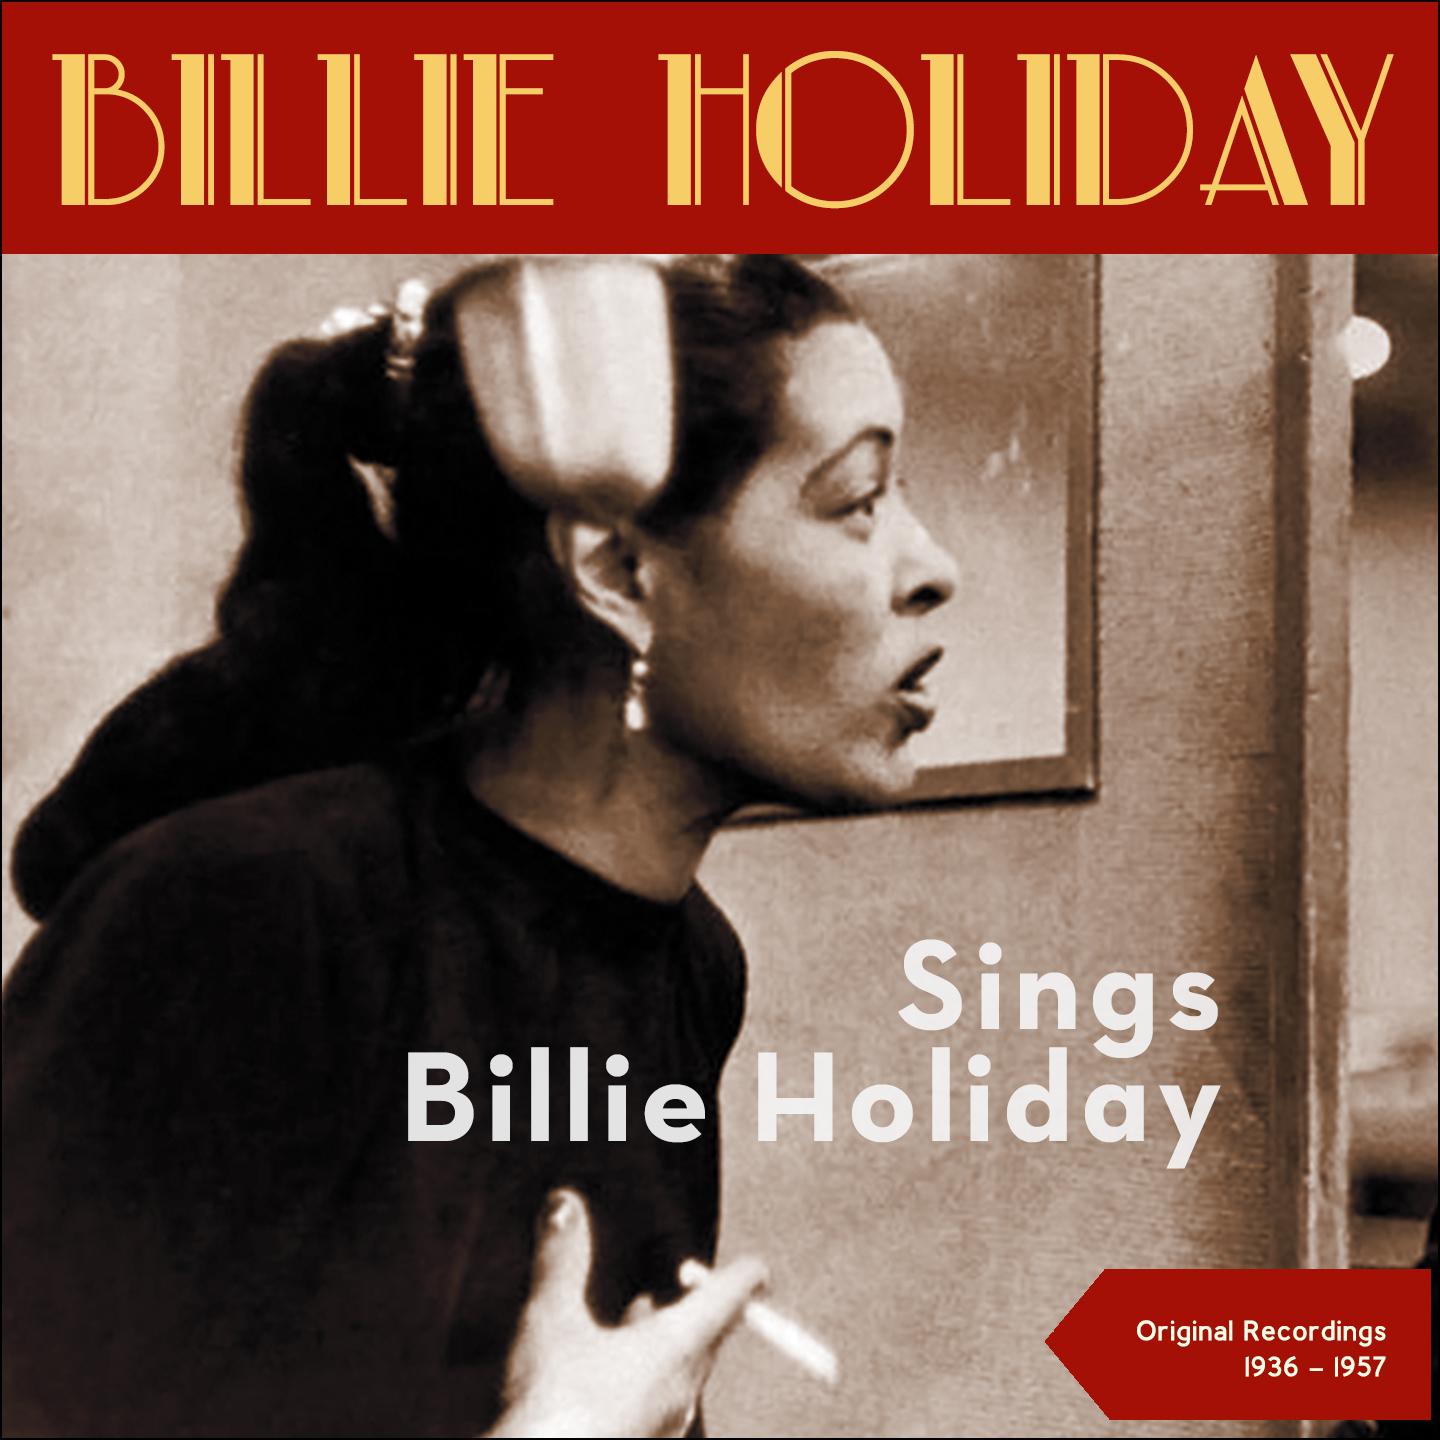 Billie Holiday sings Billie Holiday (Original Recordings 1936 - 1957)